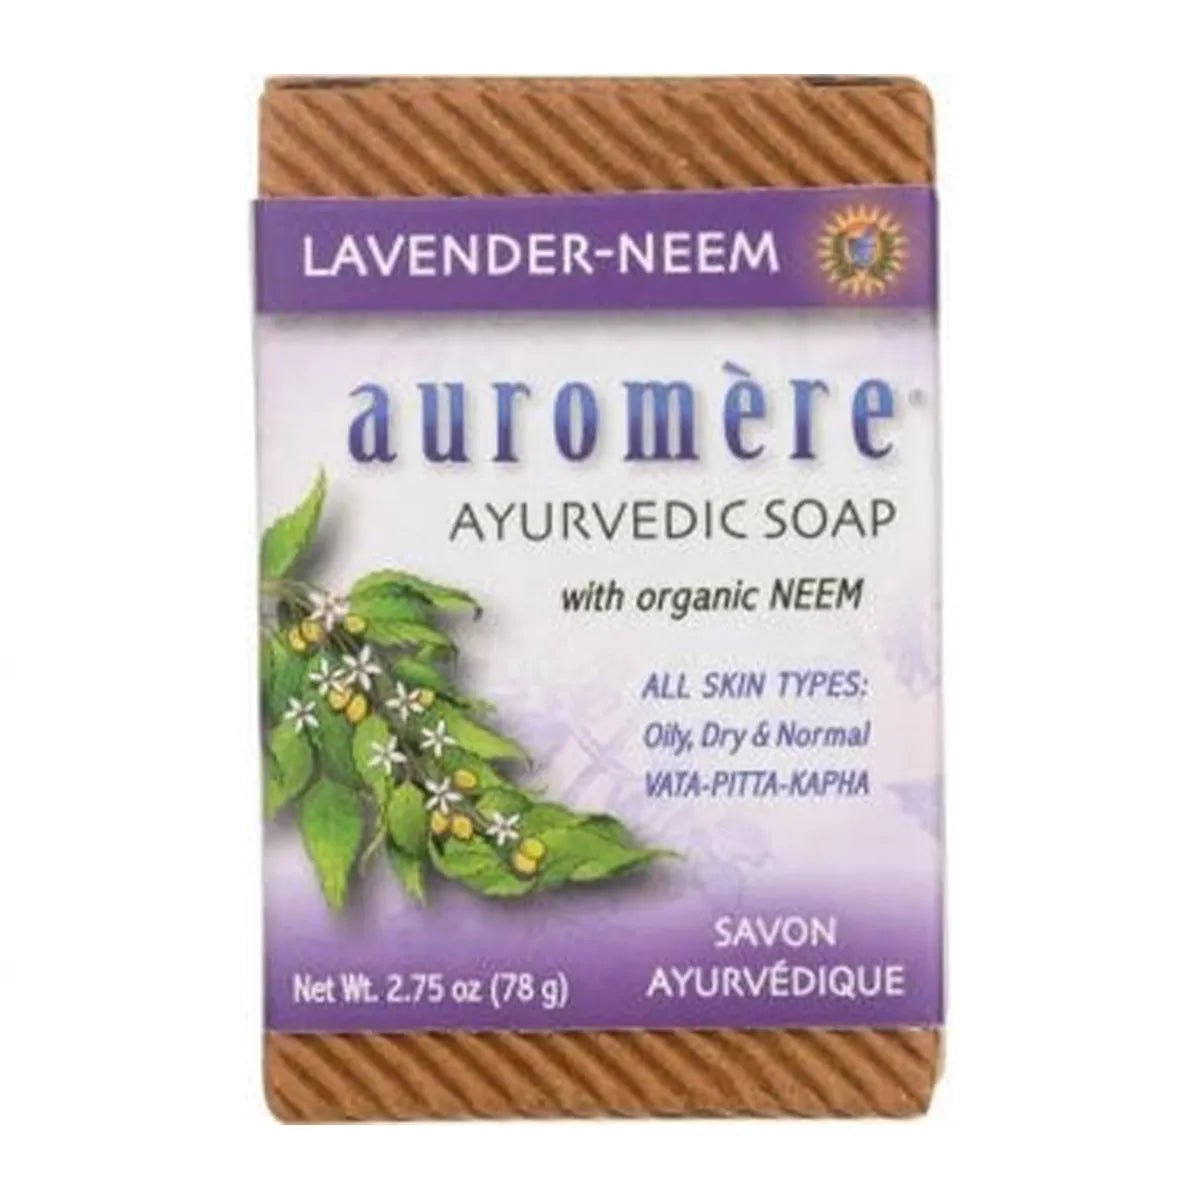 Auromere Ayurvedic Soap Lavender Neem 78g